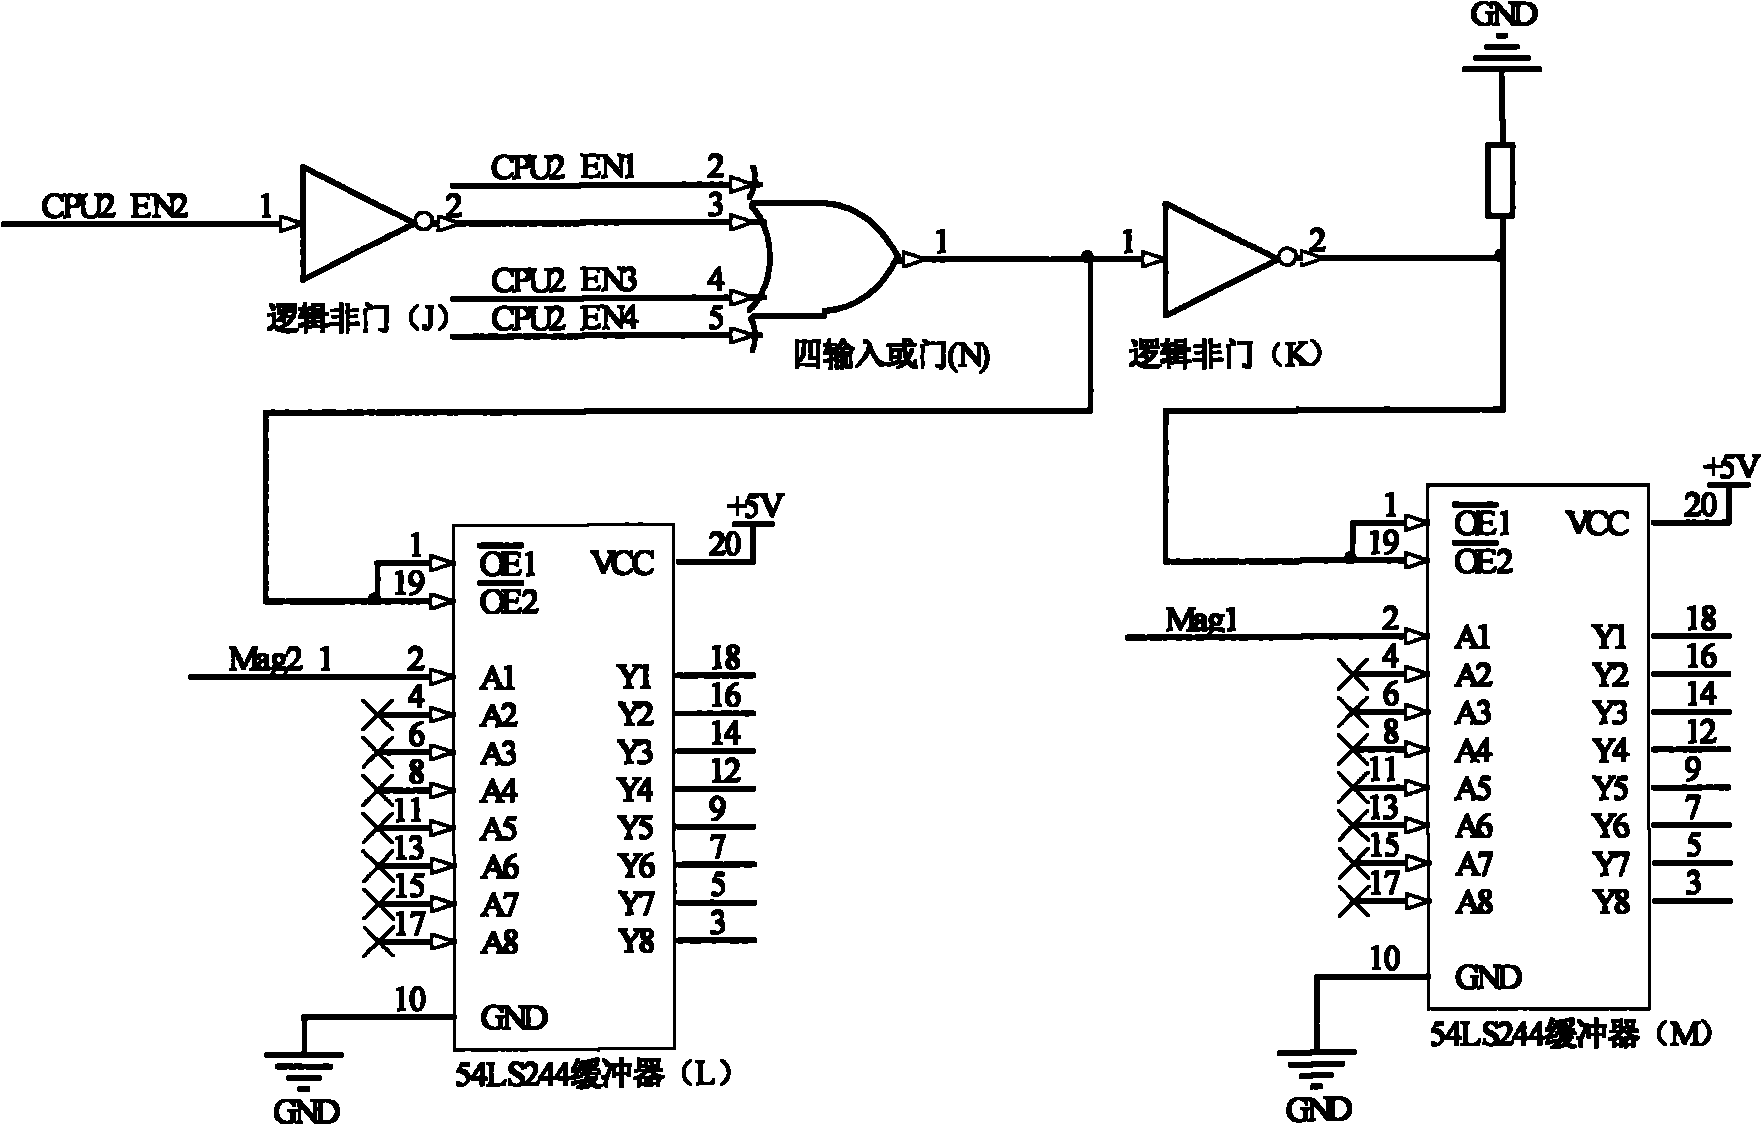 Double-CPU redundancy control system based on analysis redundancy mechanism